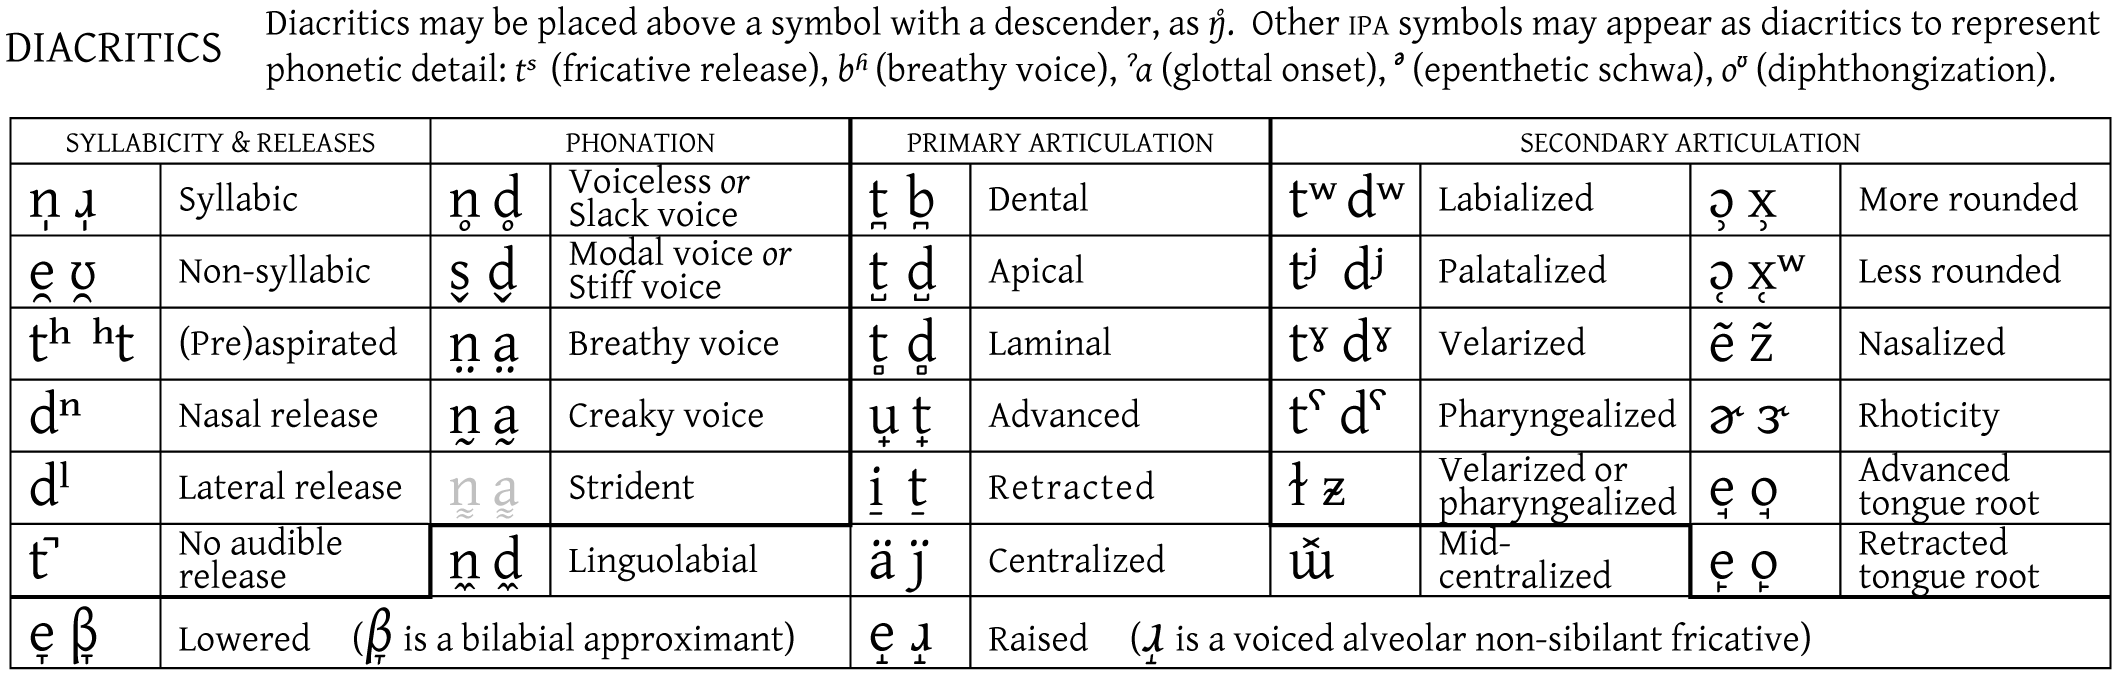 list-of-diacritical-marks-silasopa